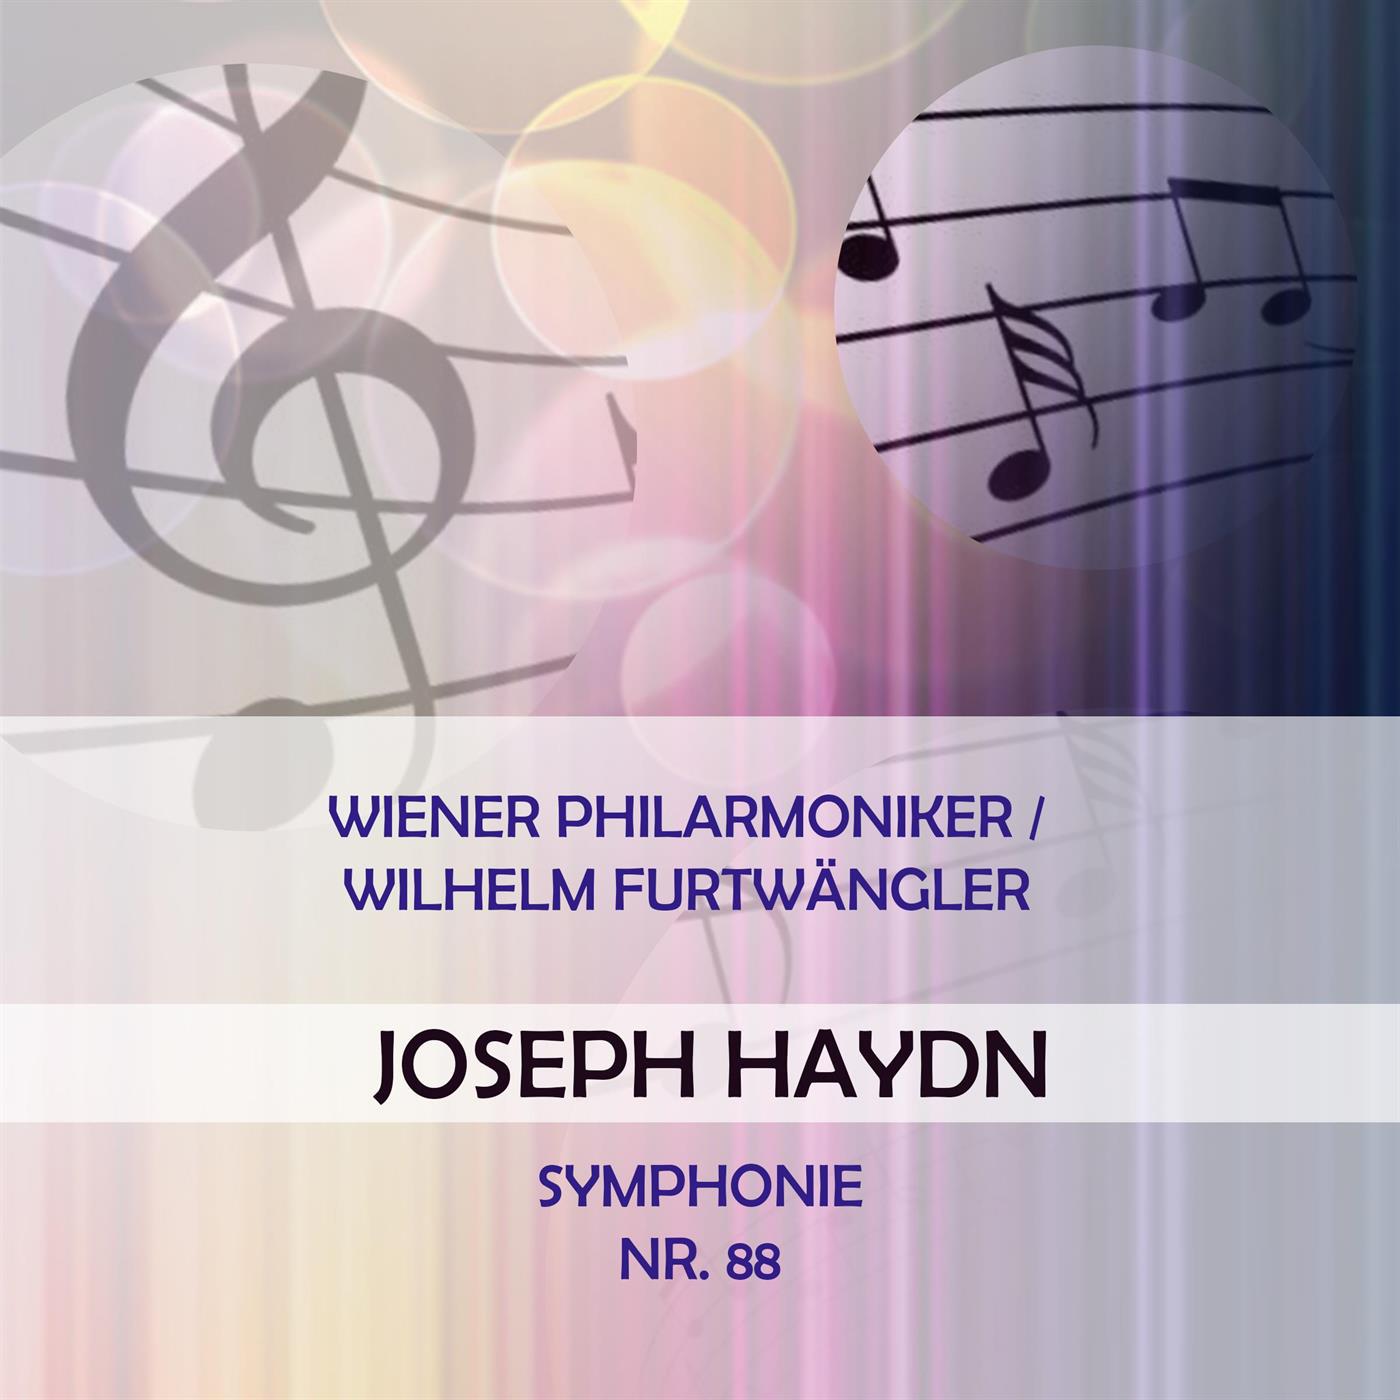 Wiener Philarmoniker / Wilhelm Furtwängler spielen: Joseph Haydn: Symphonie Nr. 88专辑